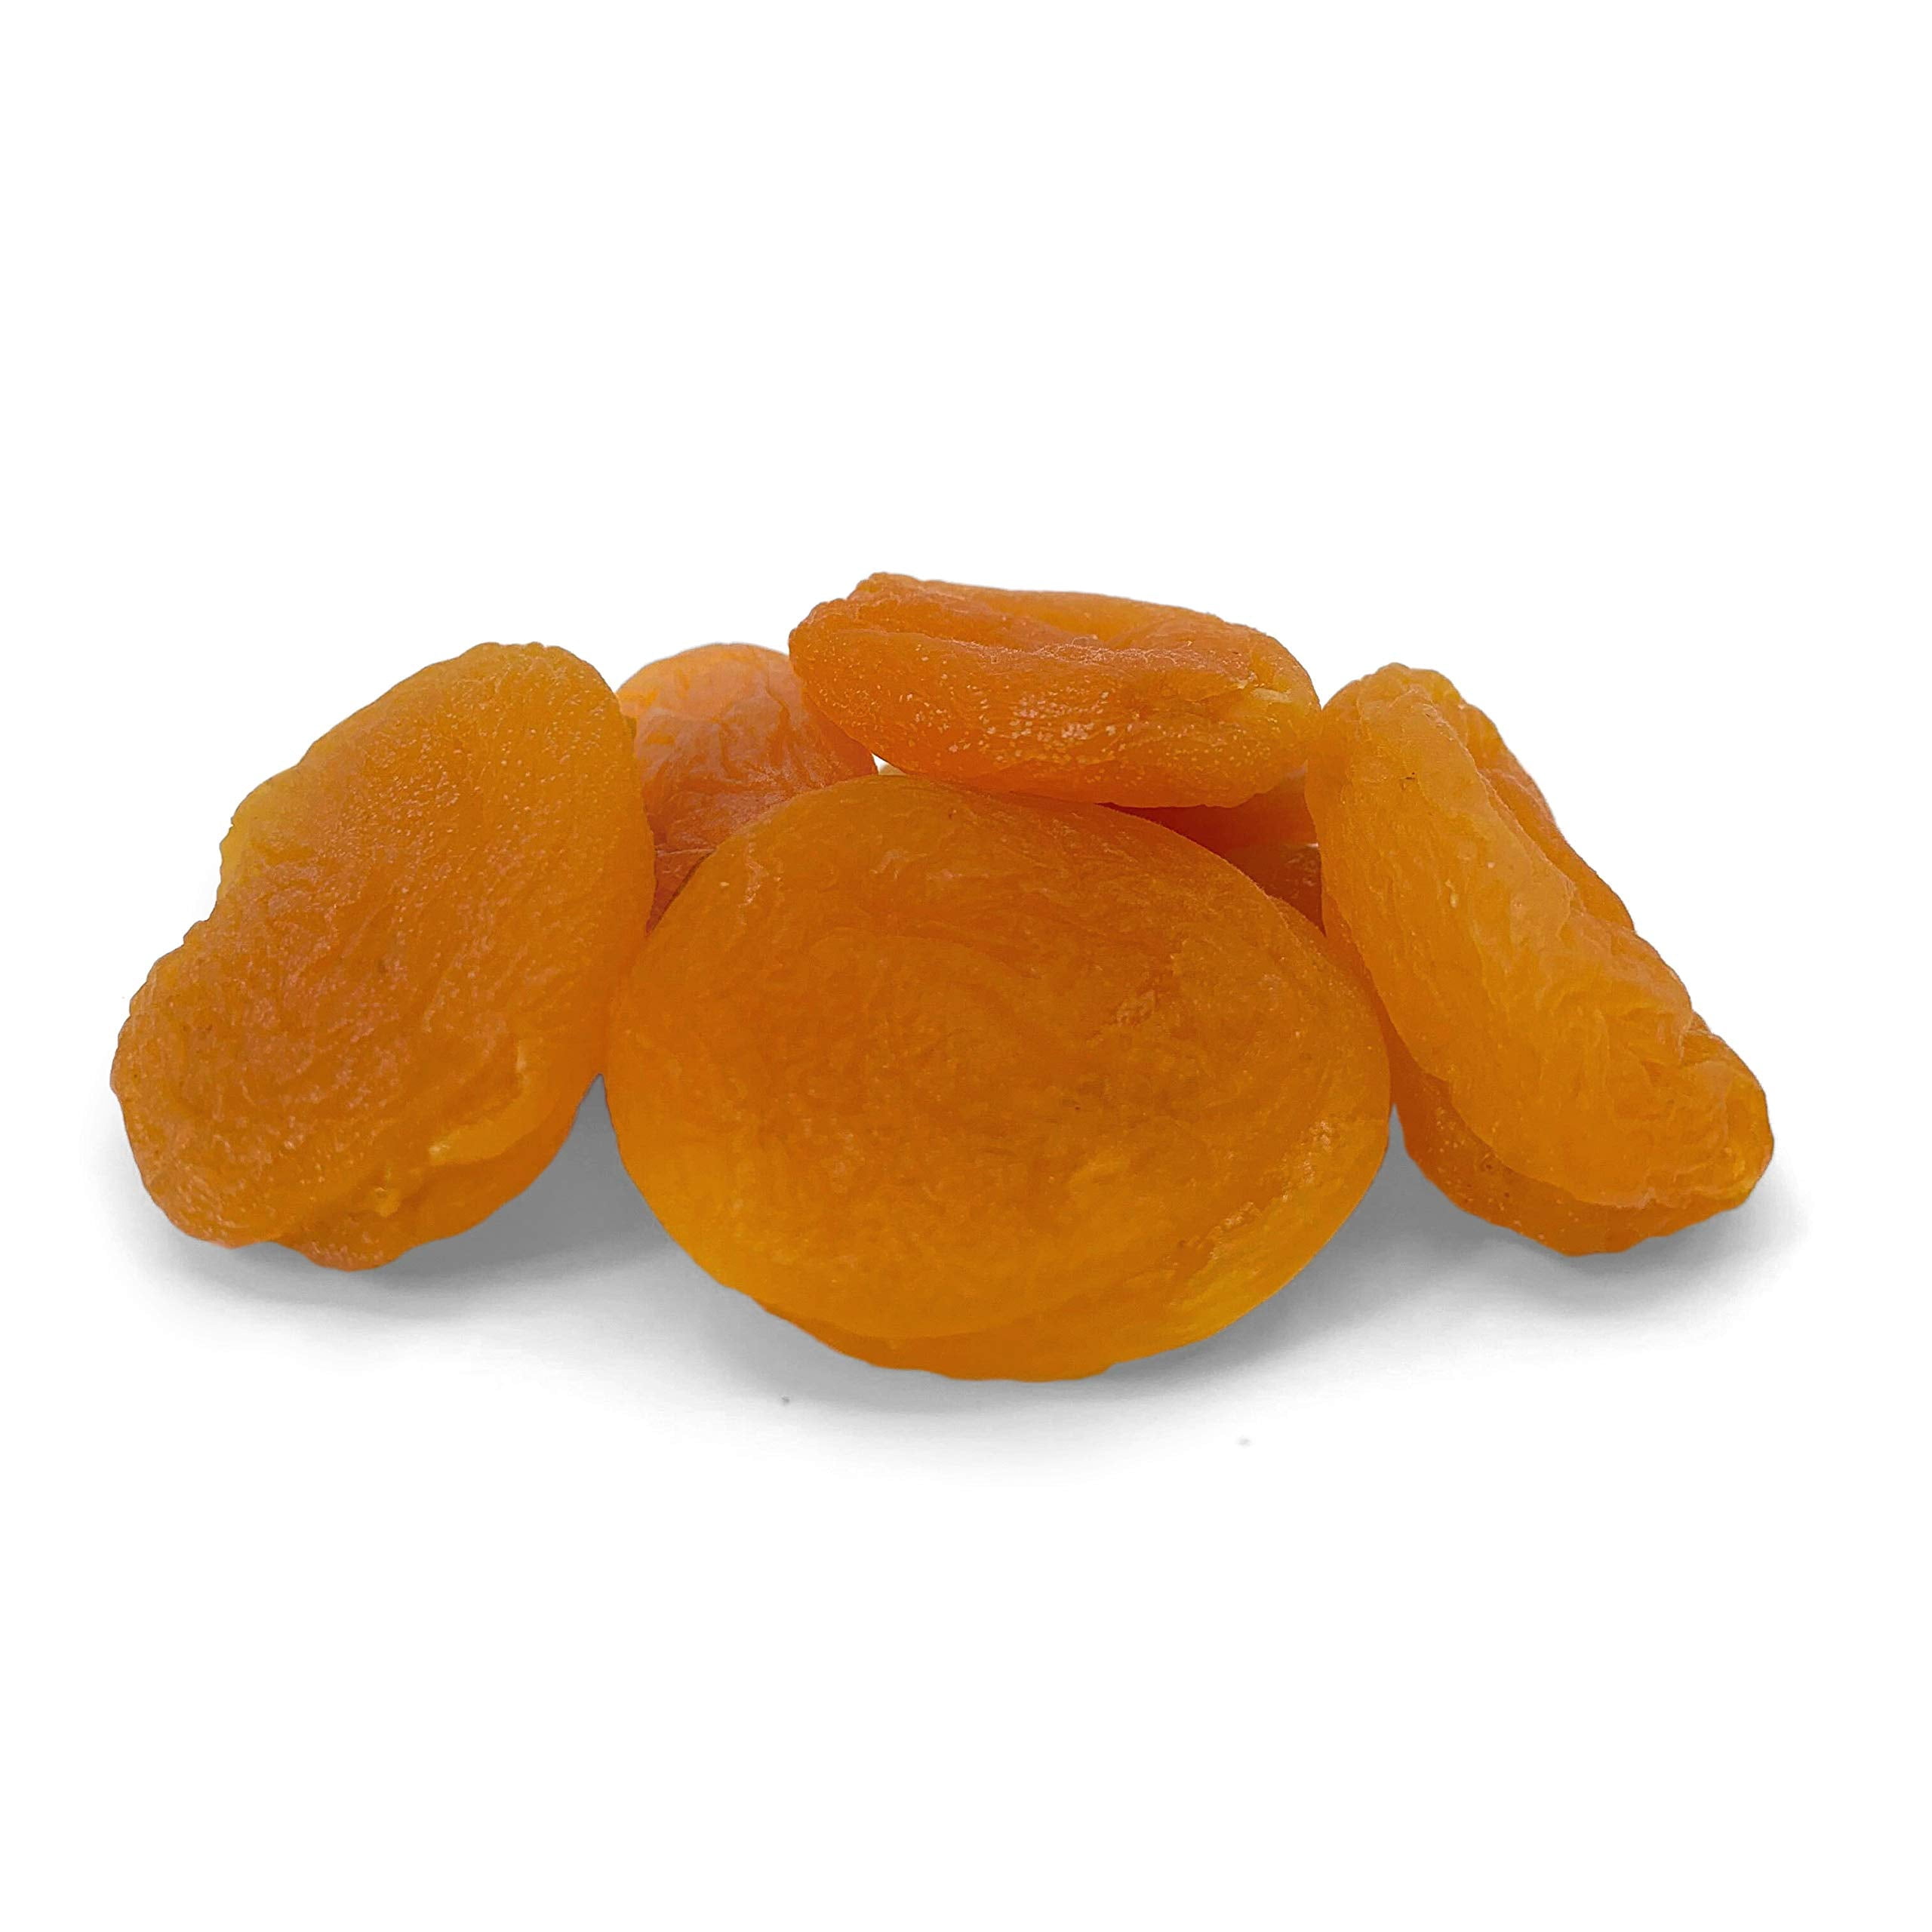 Probiotic Apricot Single Serve